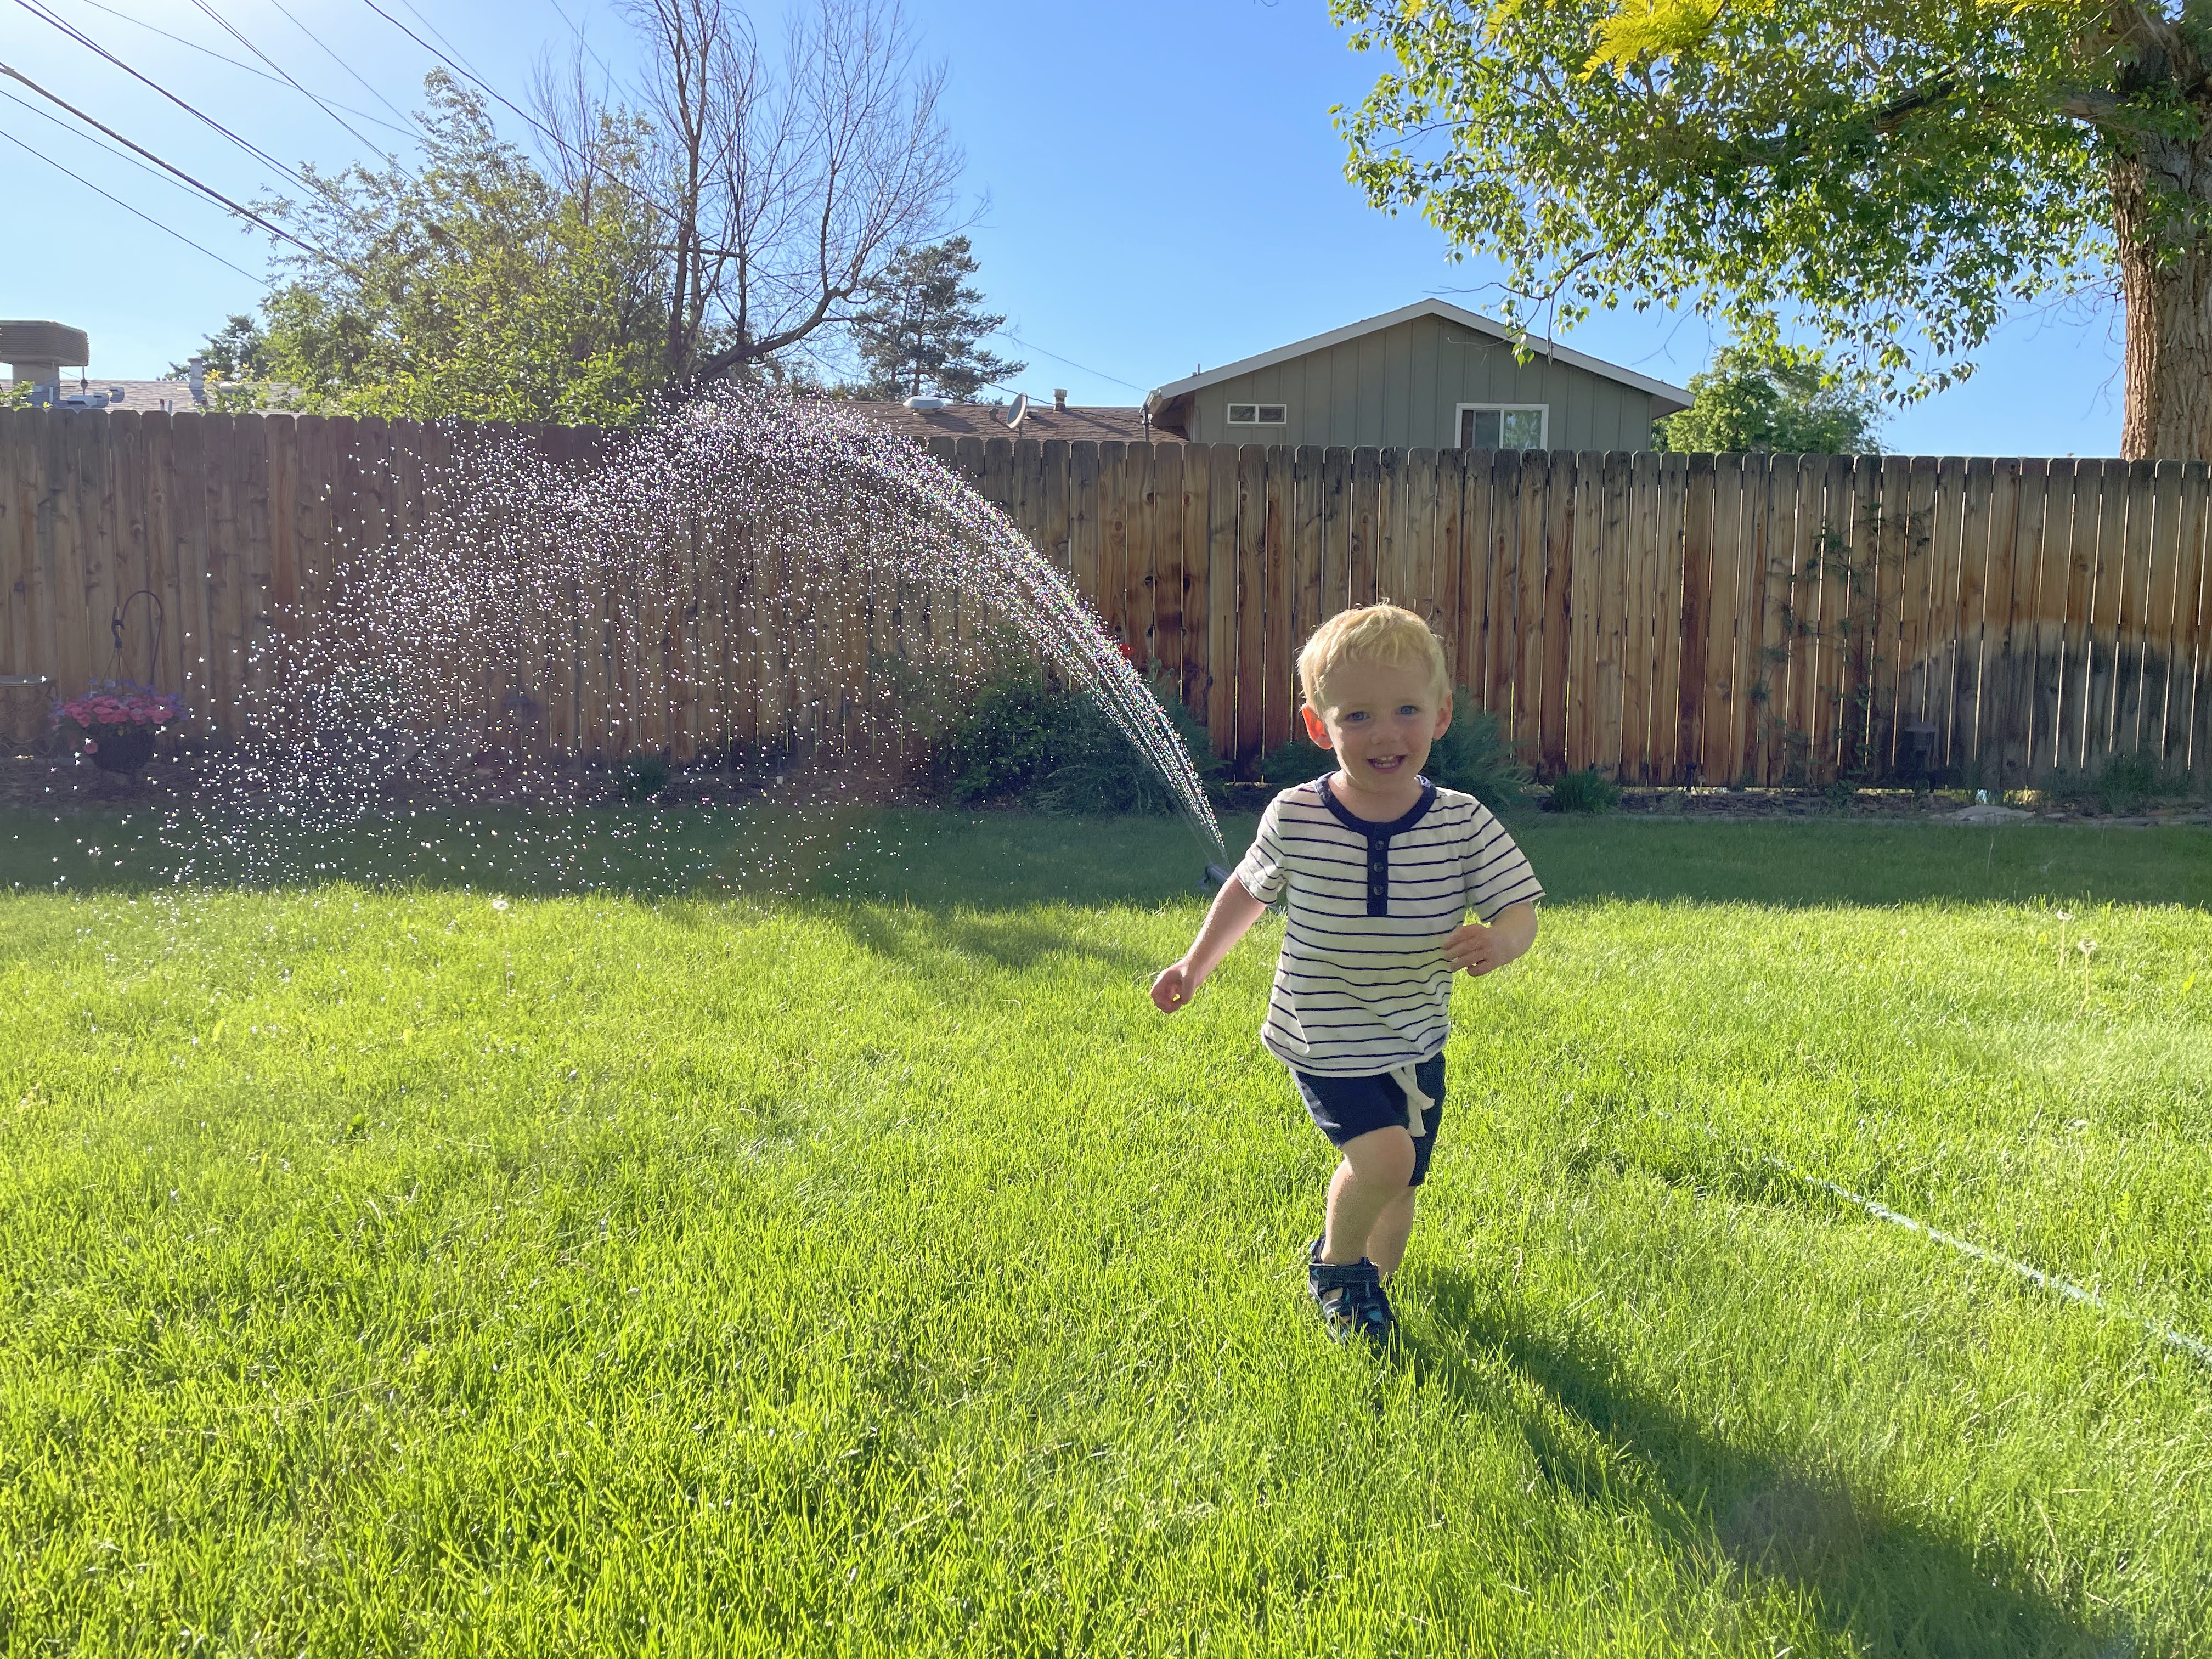 Owen playing in a sprinkler